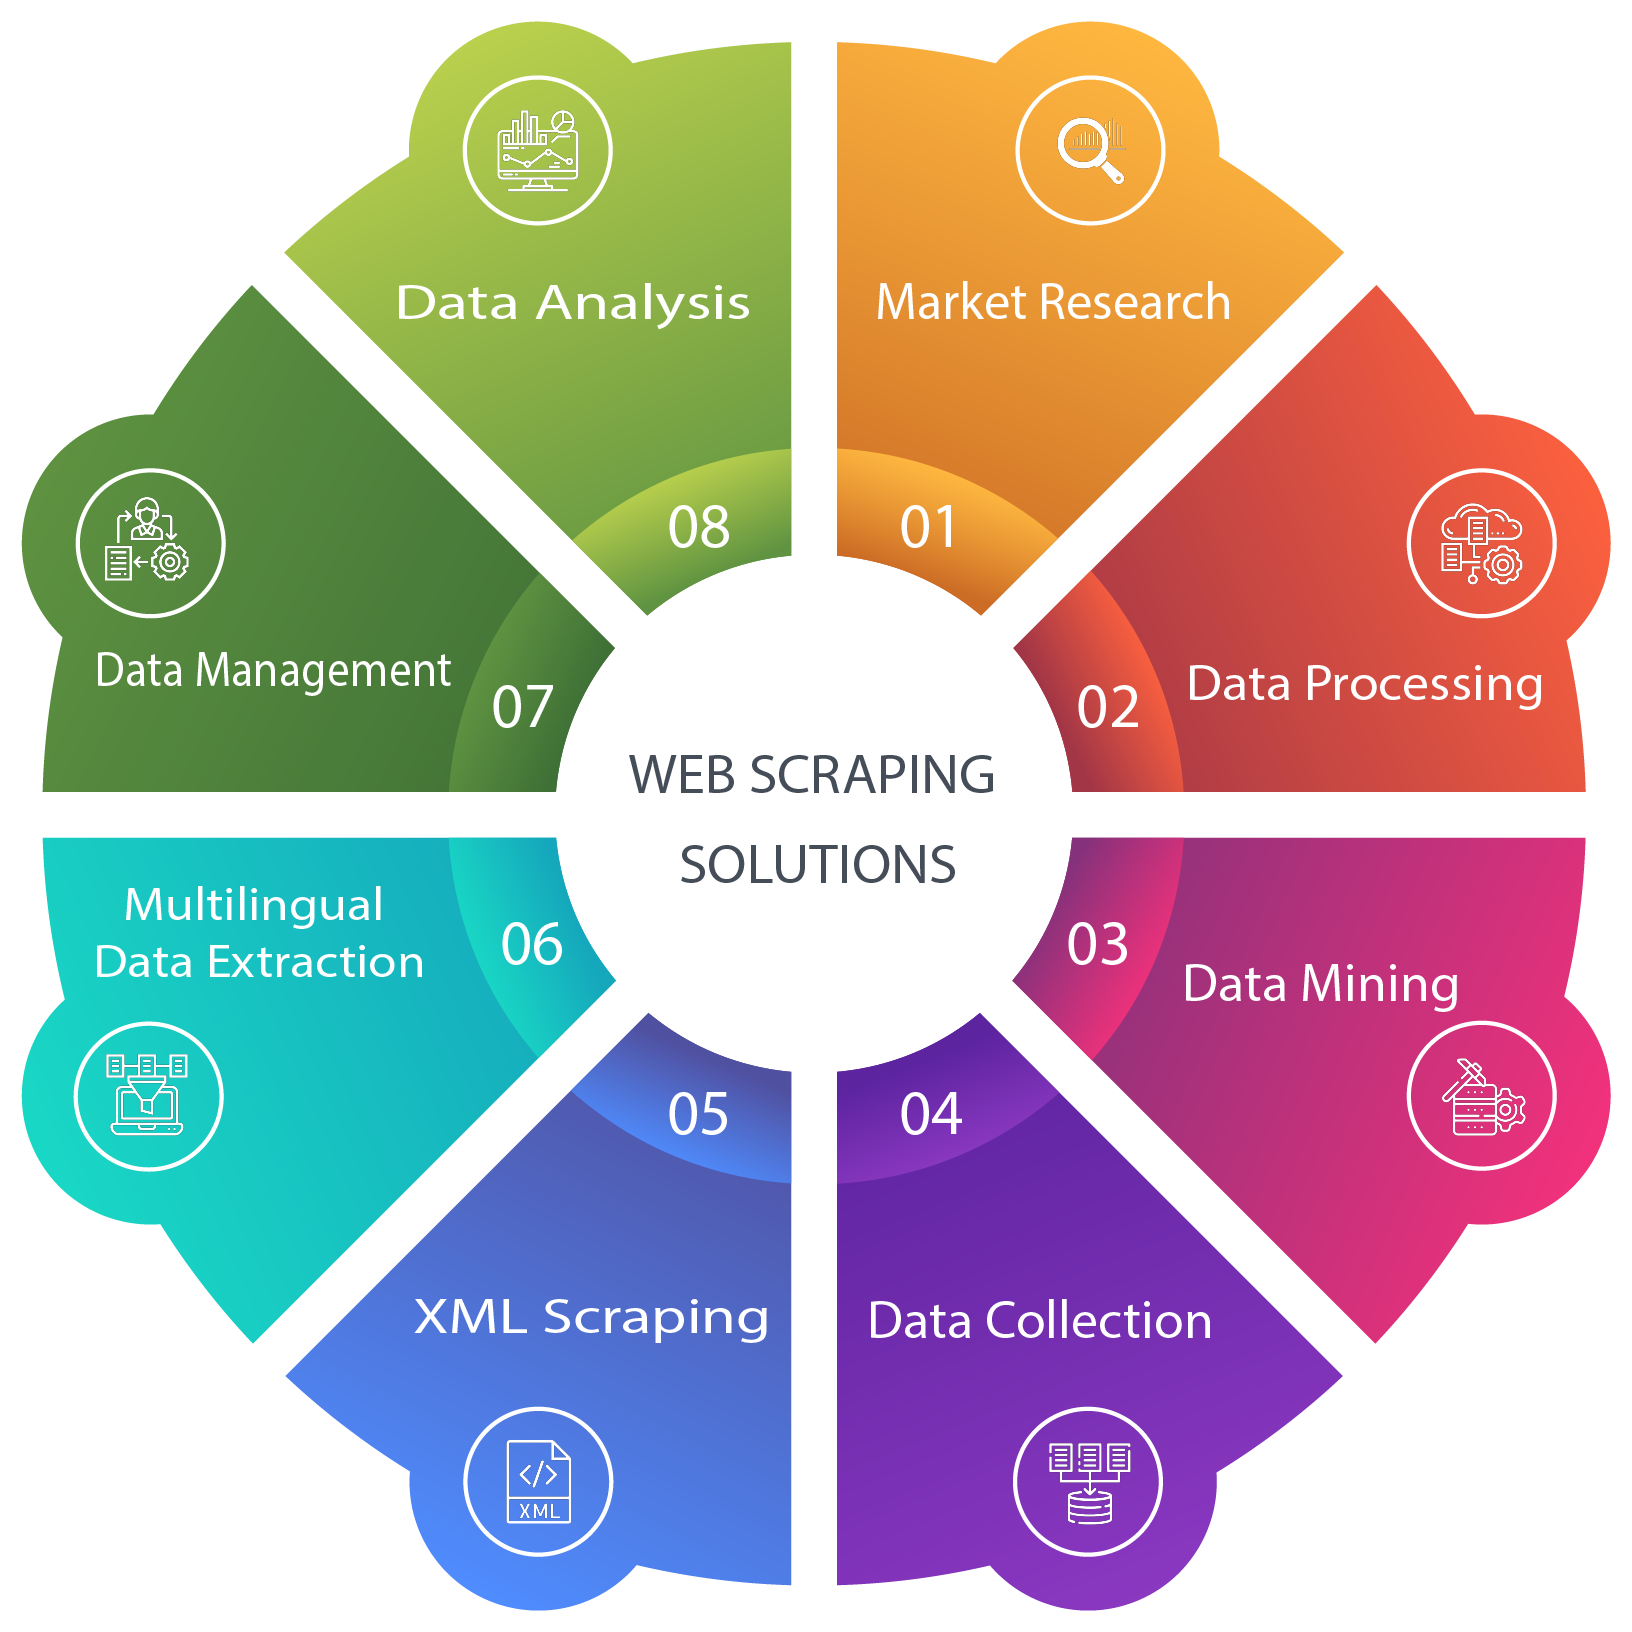  Data & Web Scraping offer